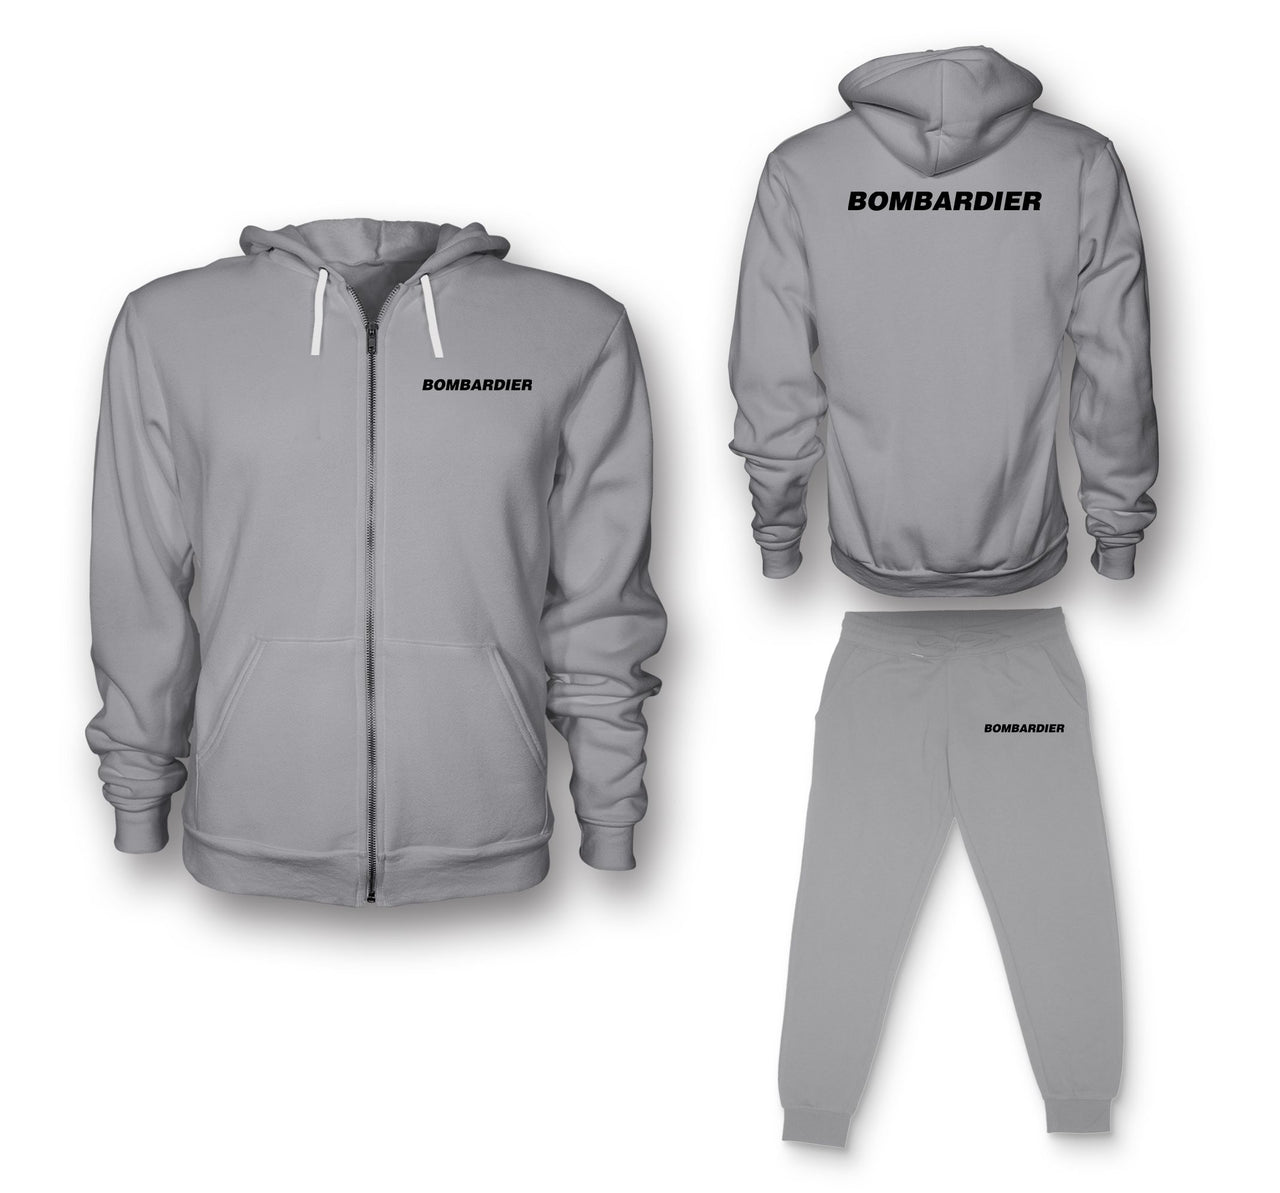 Bombardier & Text Designed Zipped Hoodies & Sweatpants Set